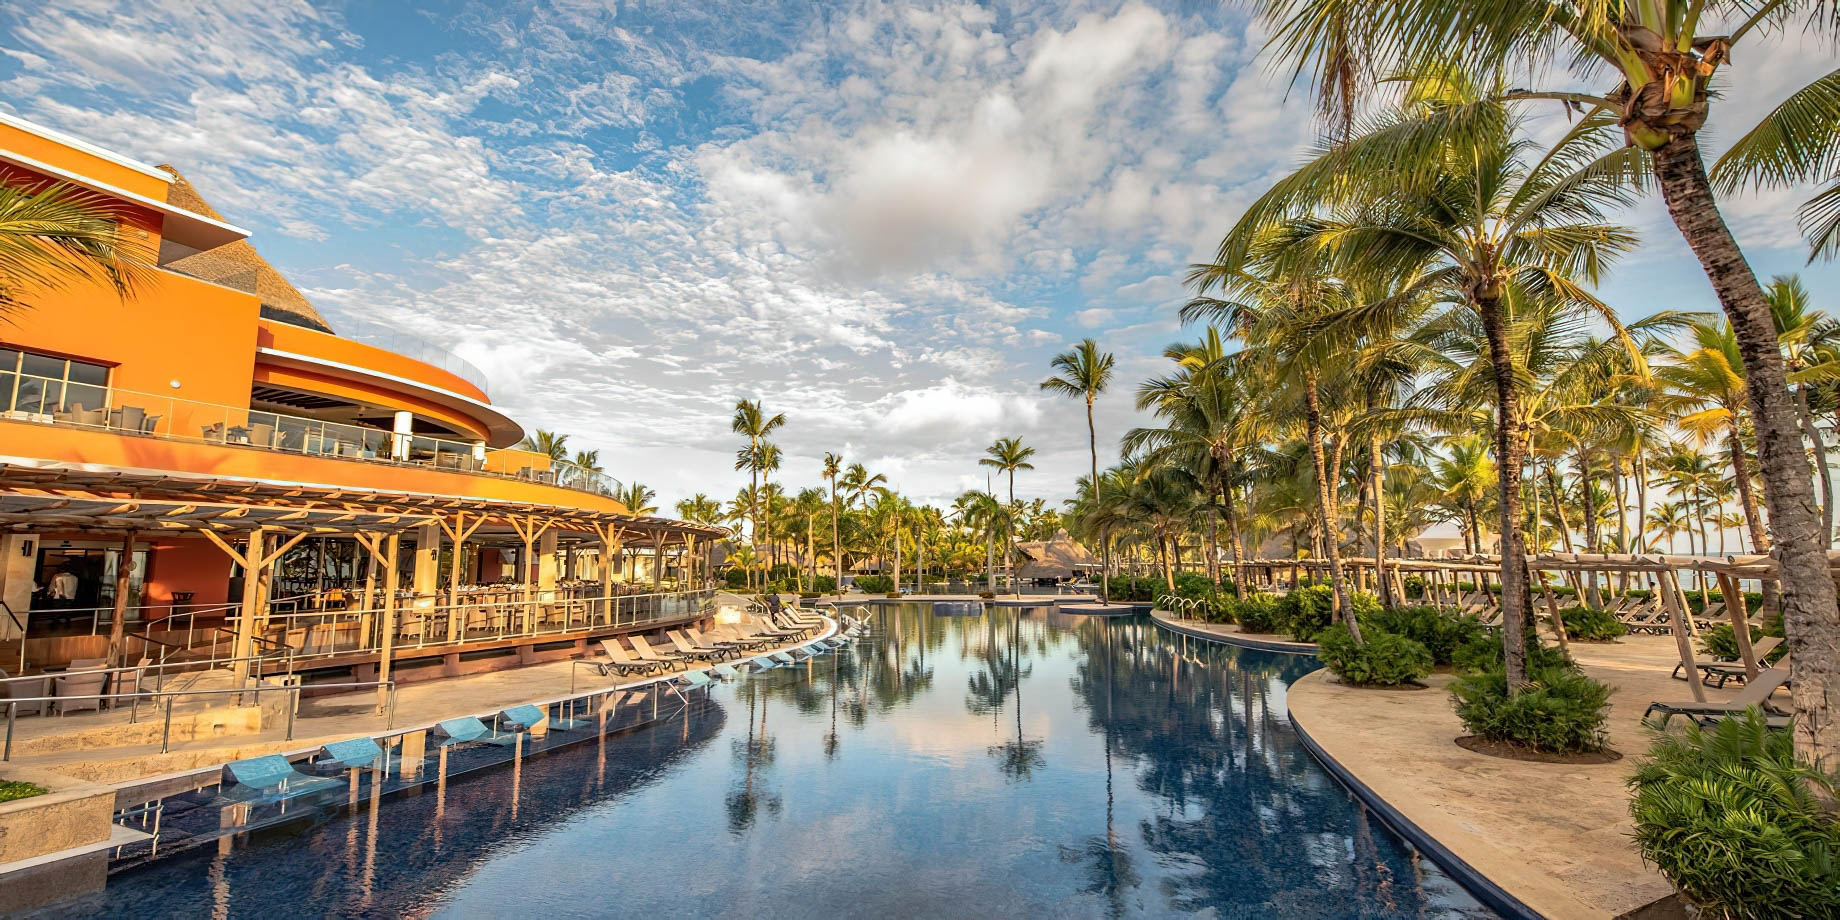 Barceló Bávaro Palace Hotel Grand Resort - Punta Cana, Dominican Republic - Pool